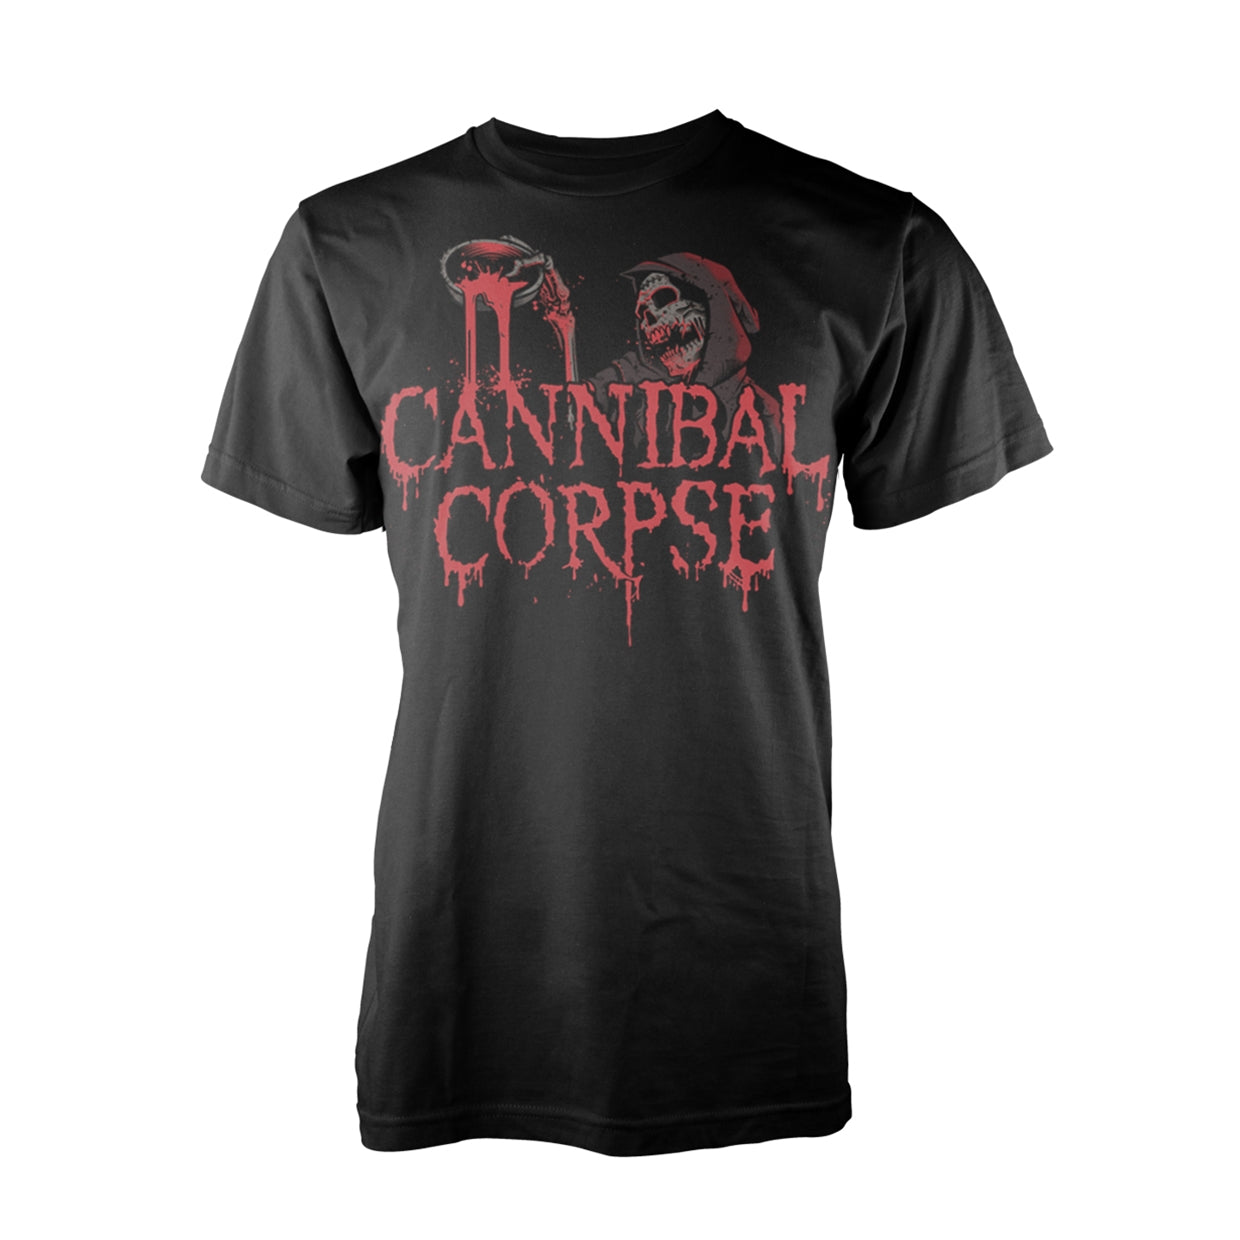 Cannibal Corpse "Acid Blood" T shirt